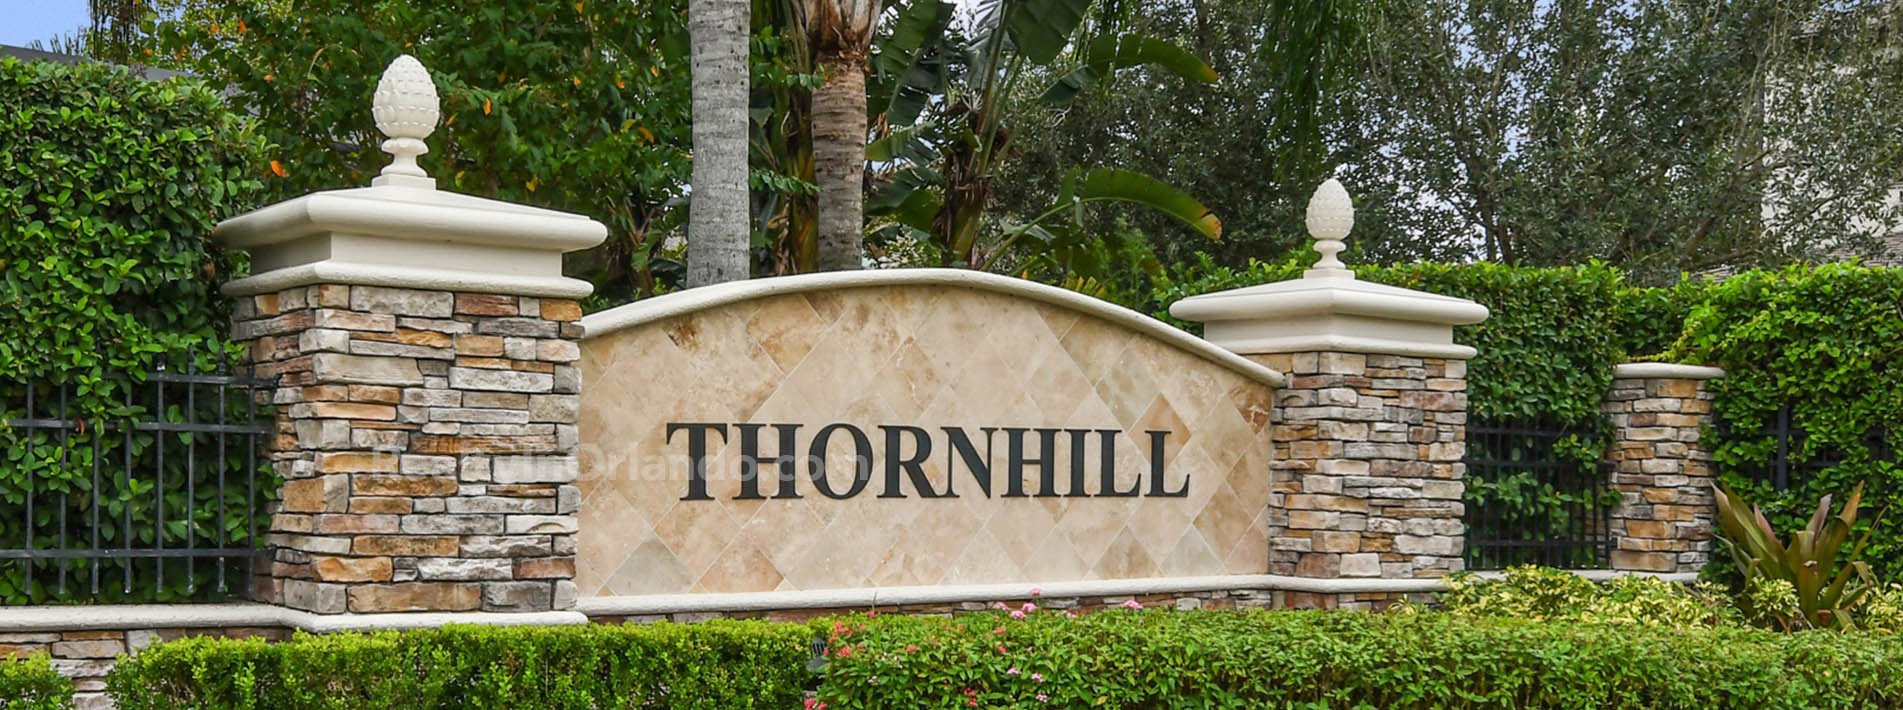 Thornhill Orlando Homes for Sale